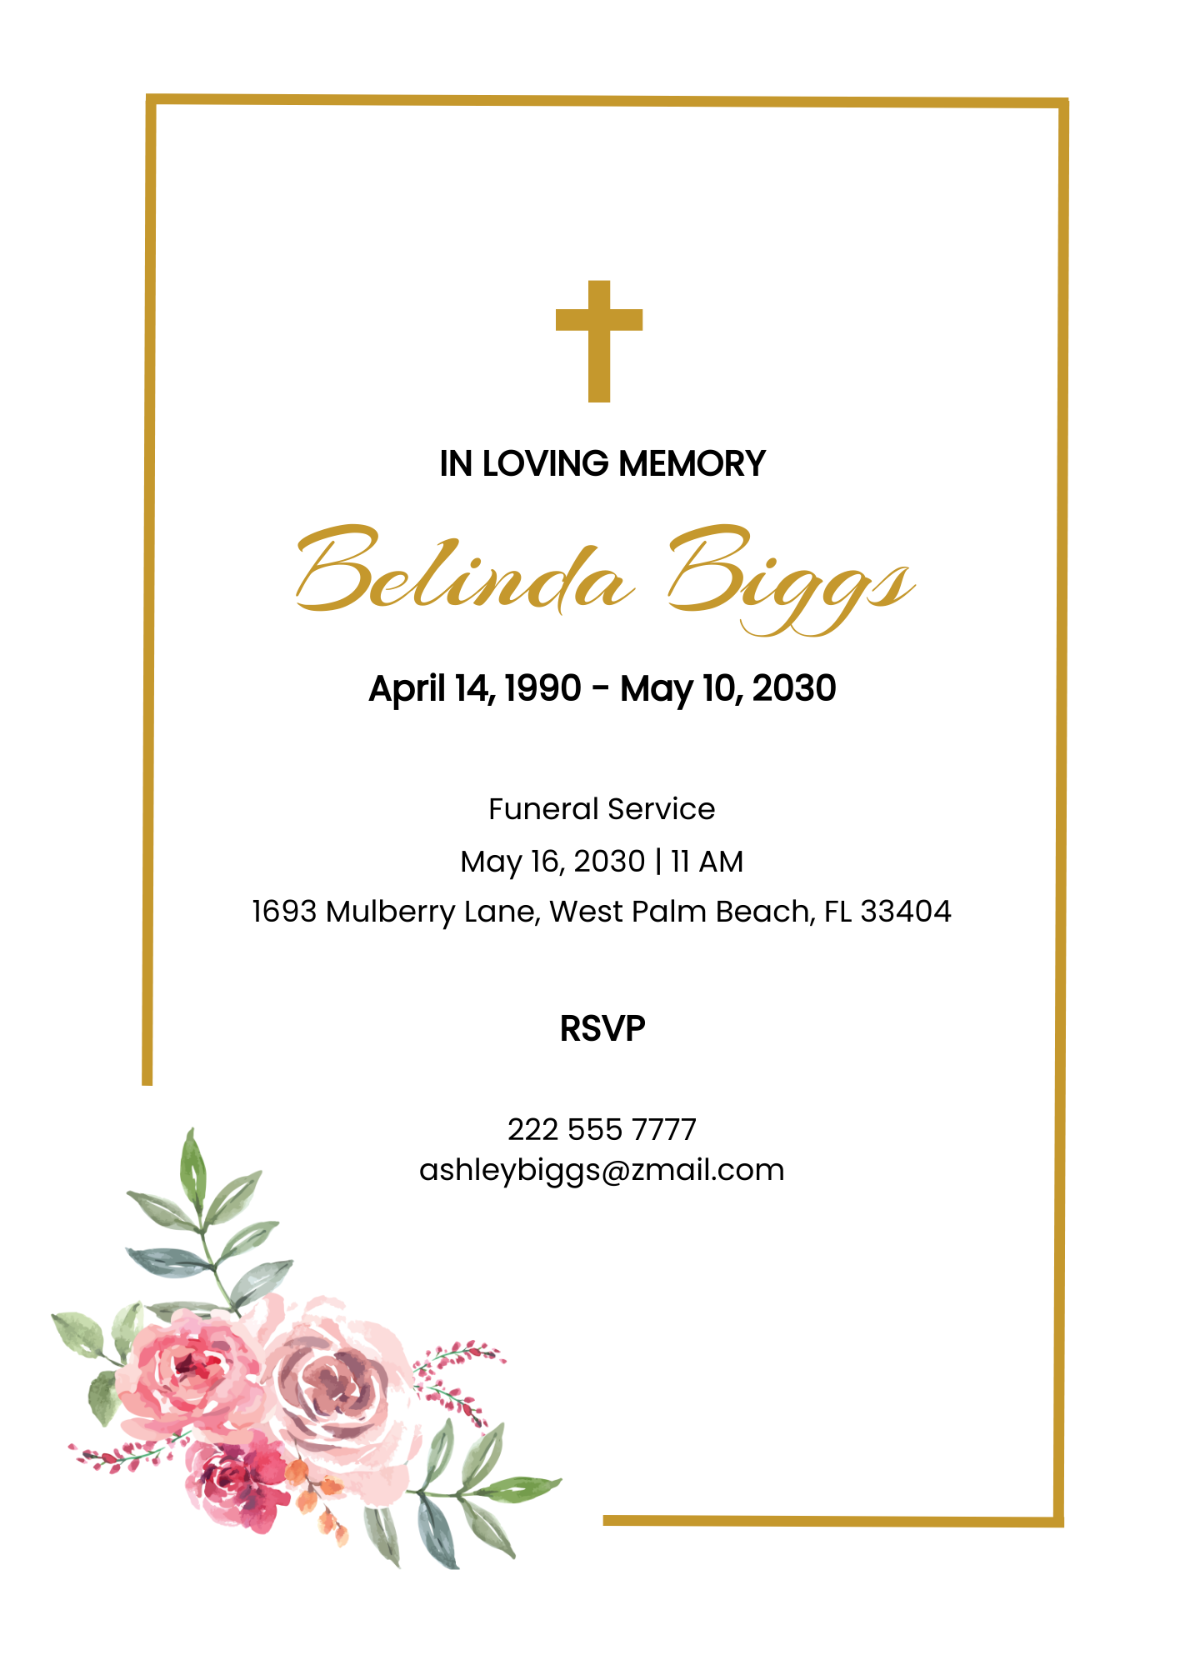 Funeral Memorial Announcement Card Template